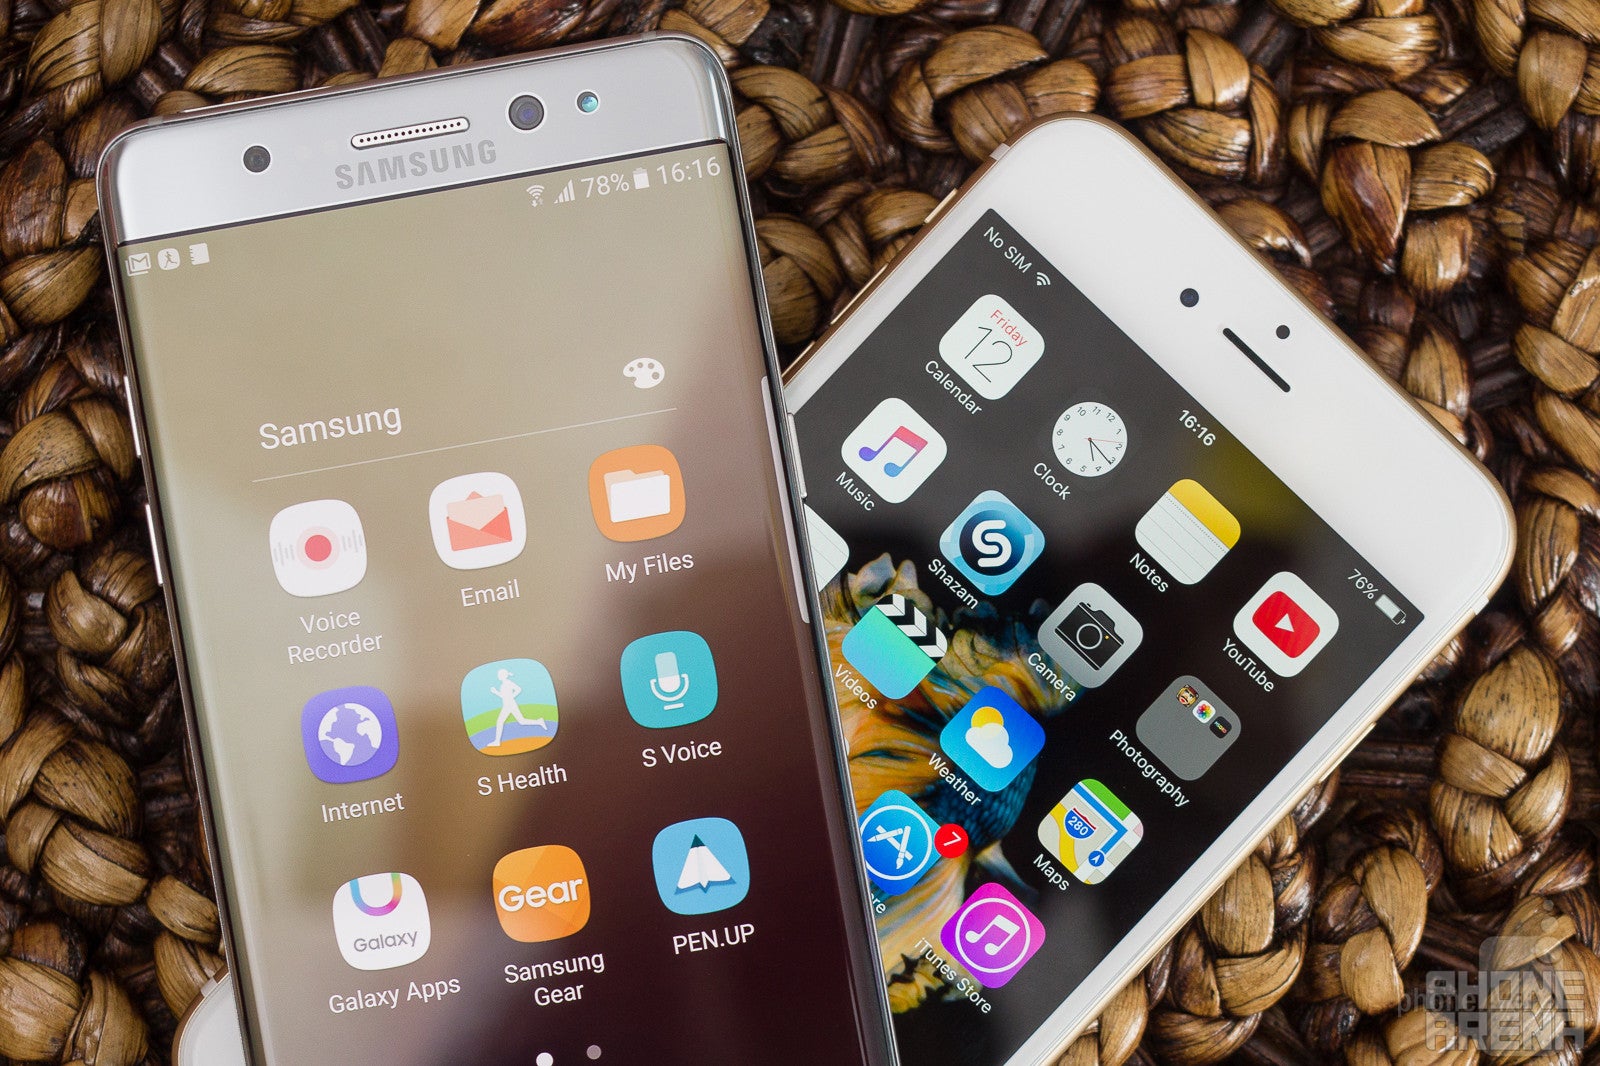 Samsung Galaxy Note 7 vs Apple iPhone 6s Plus